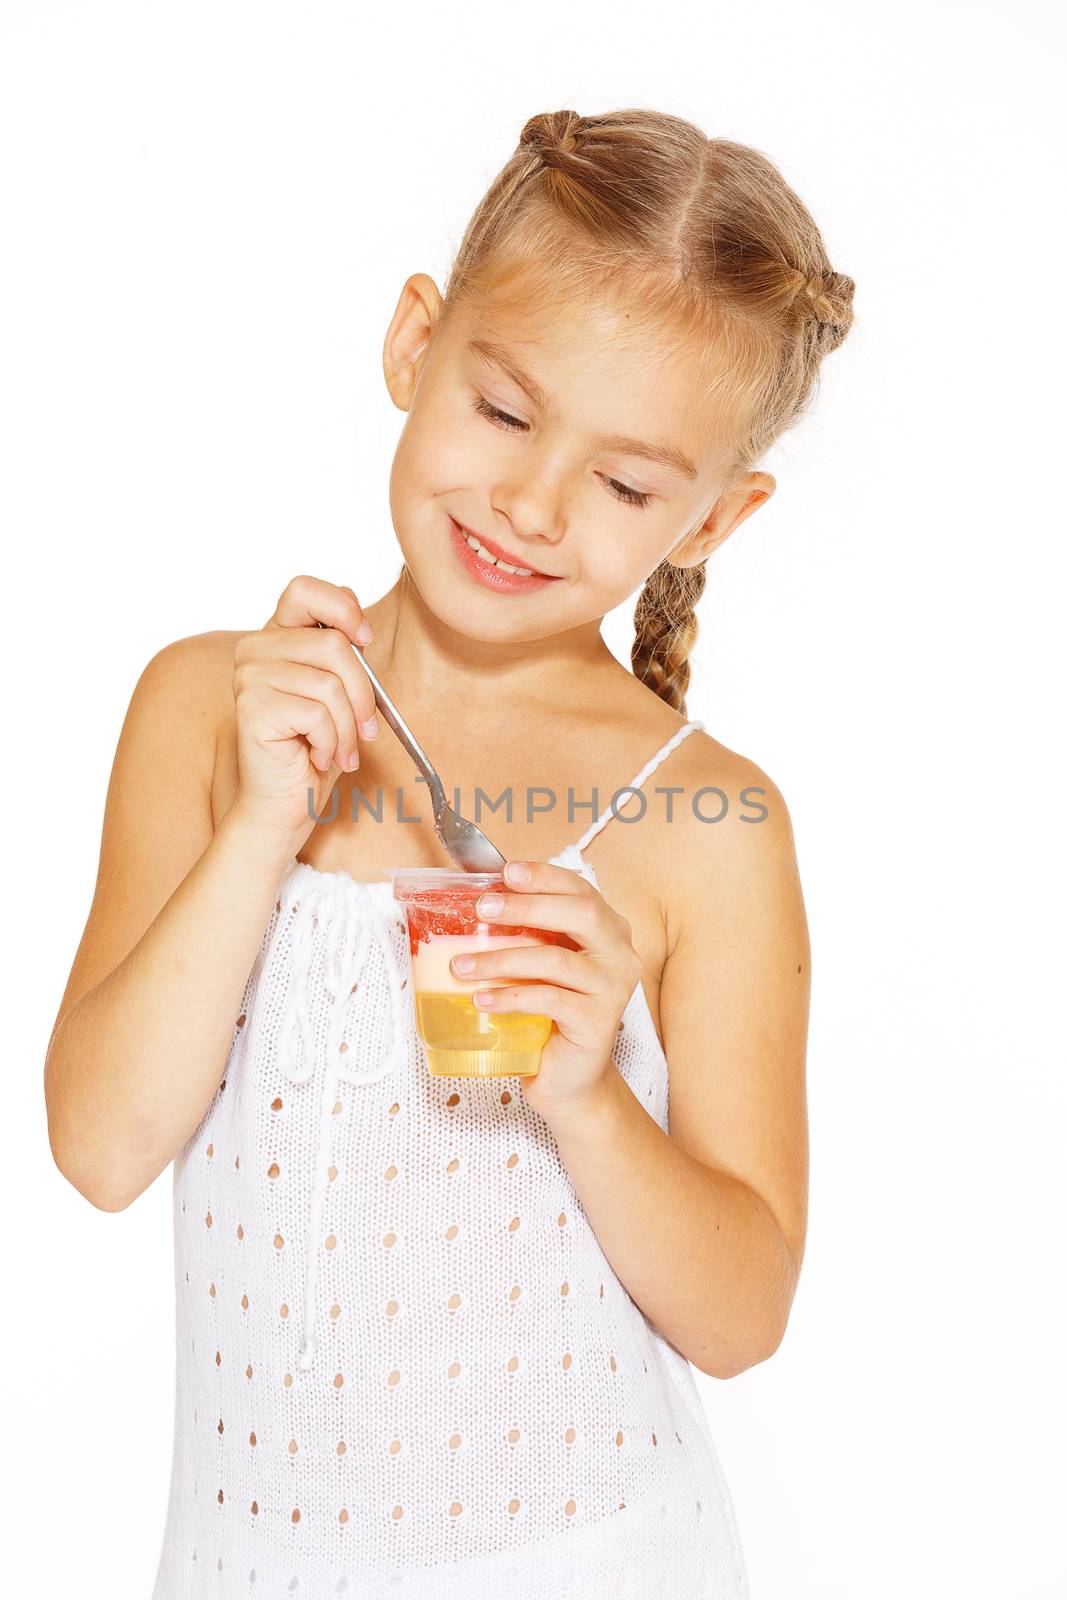 Little girl eating jello by gorov108